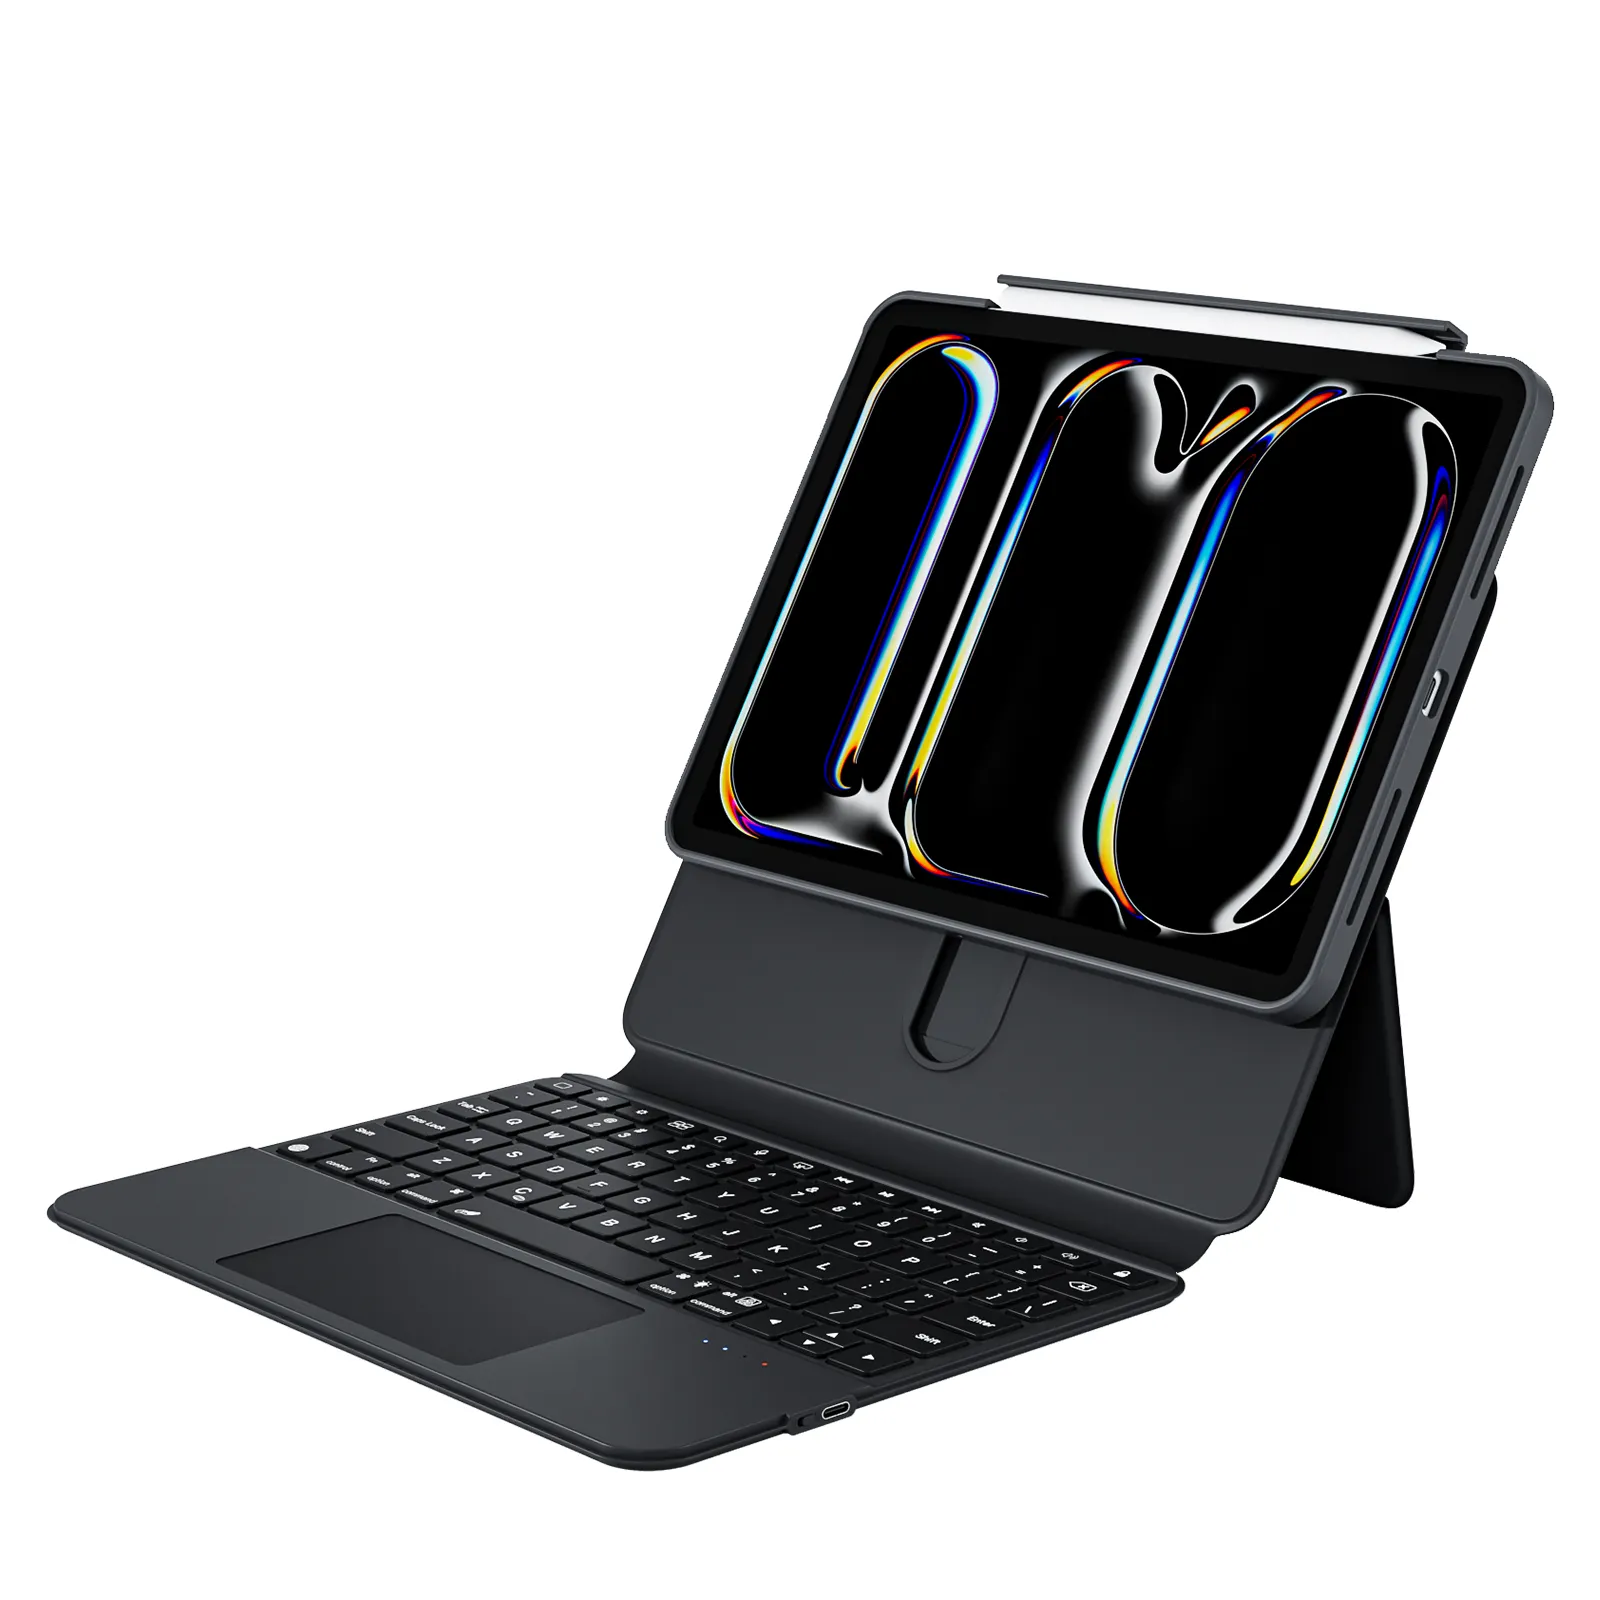 IFacomall casing Tablet Keyboard, casing Tablet Keyboard nirkabel Folio Keyboard cerdas ajaib untuk iPad